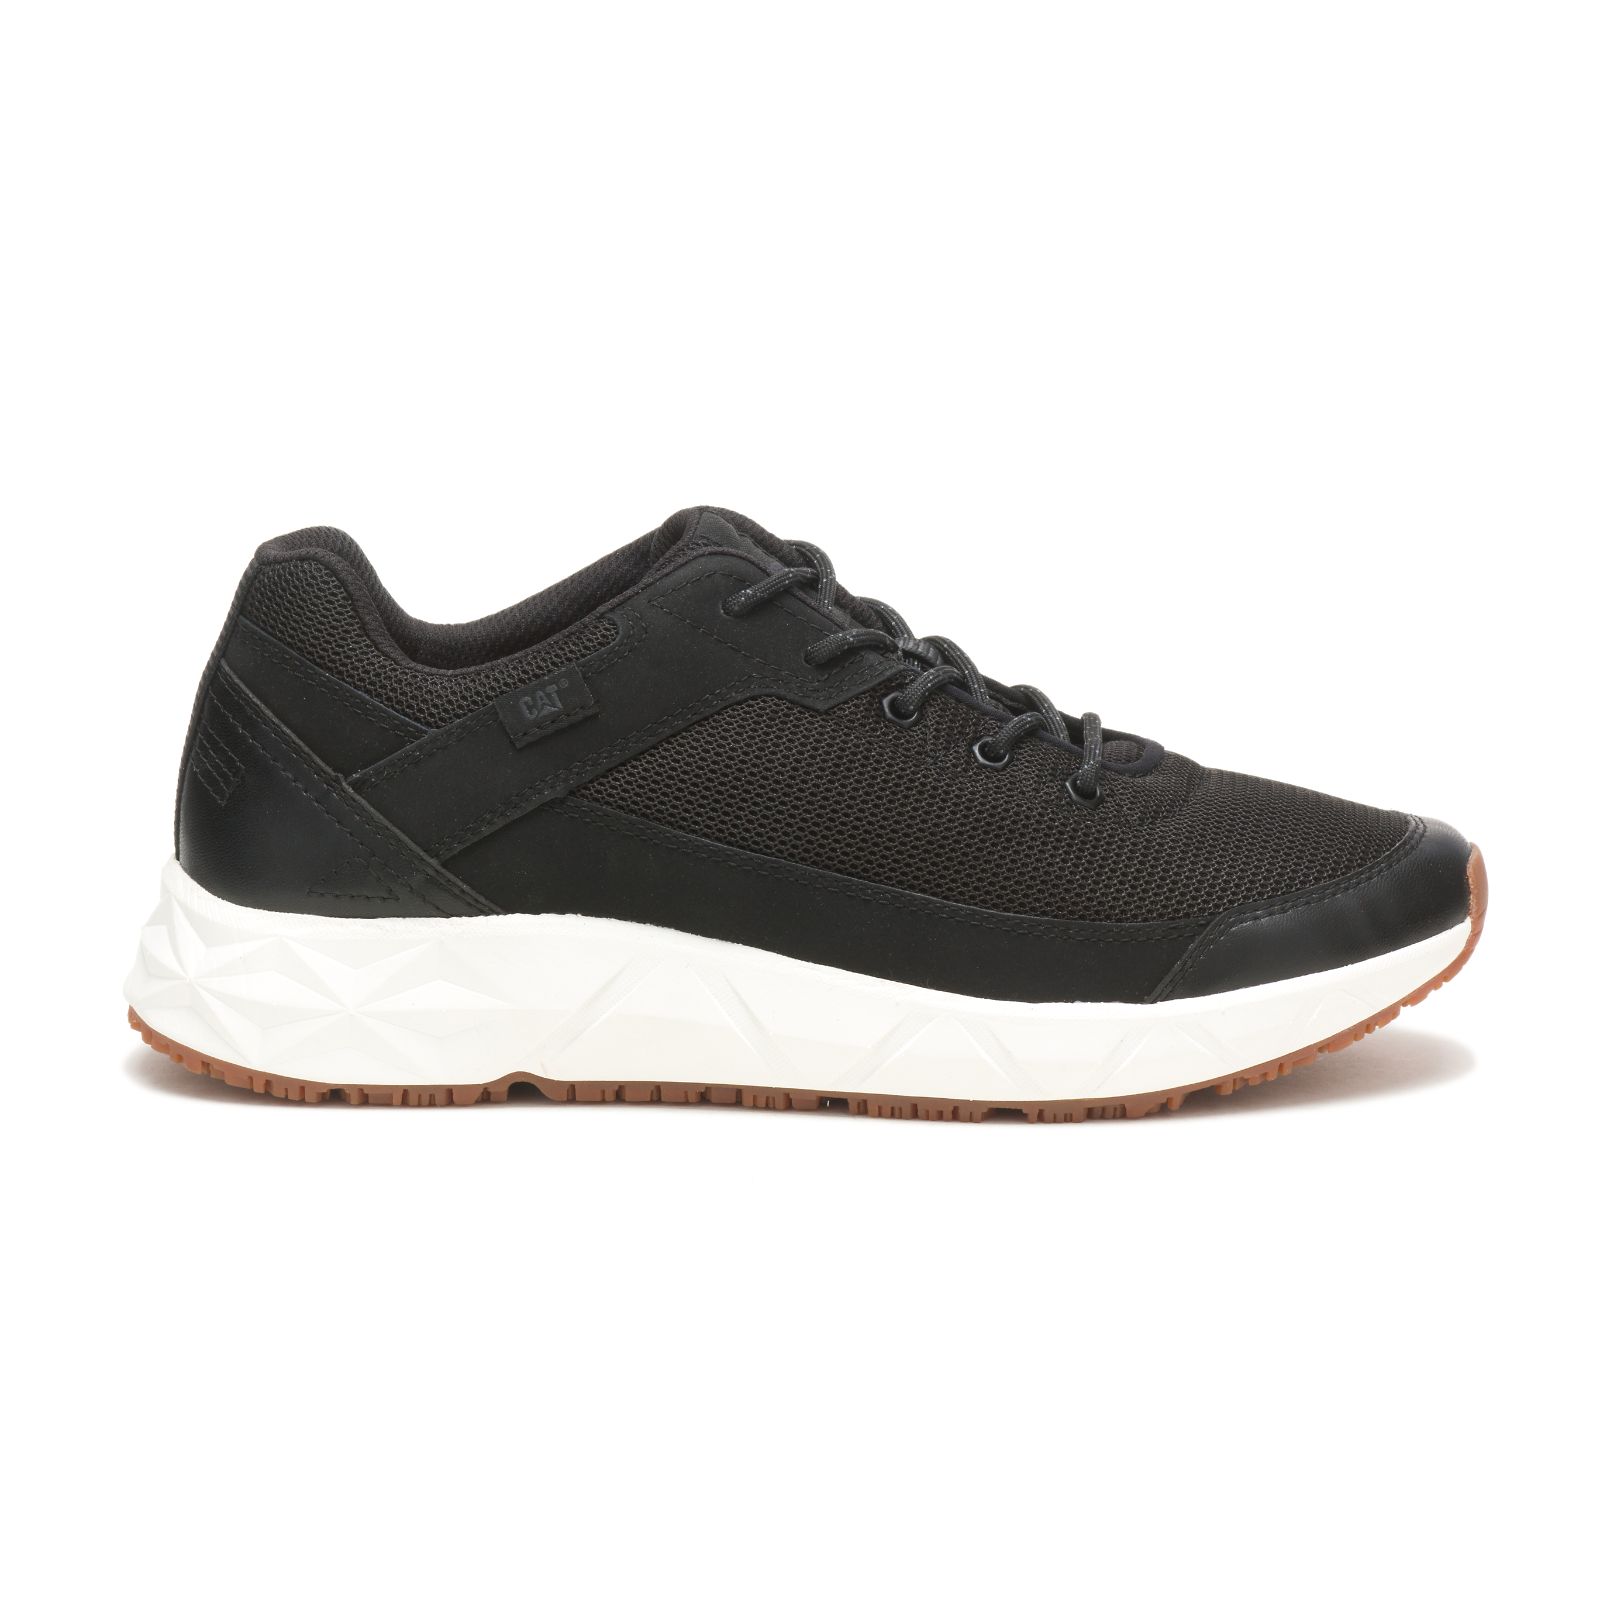 Men's Caterpillar Prorush Speed Fx Work Shoes Black/White Ireland AQWE71390